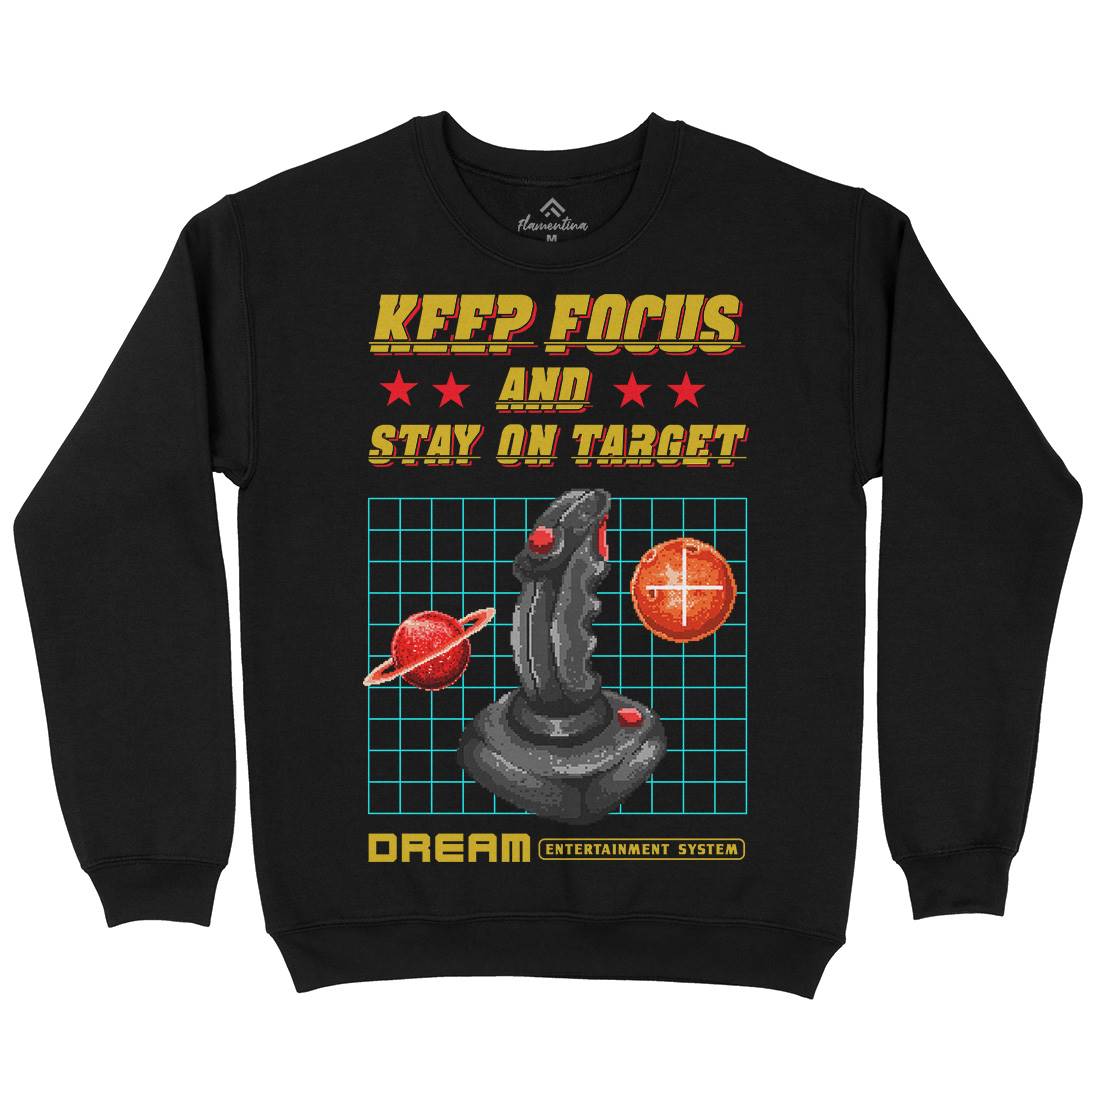 Stay On Target Kids Crew Neck Sweatshirt Geek B959